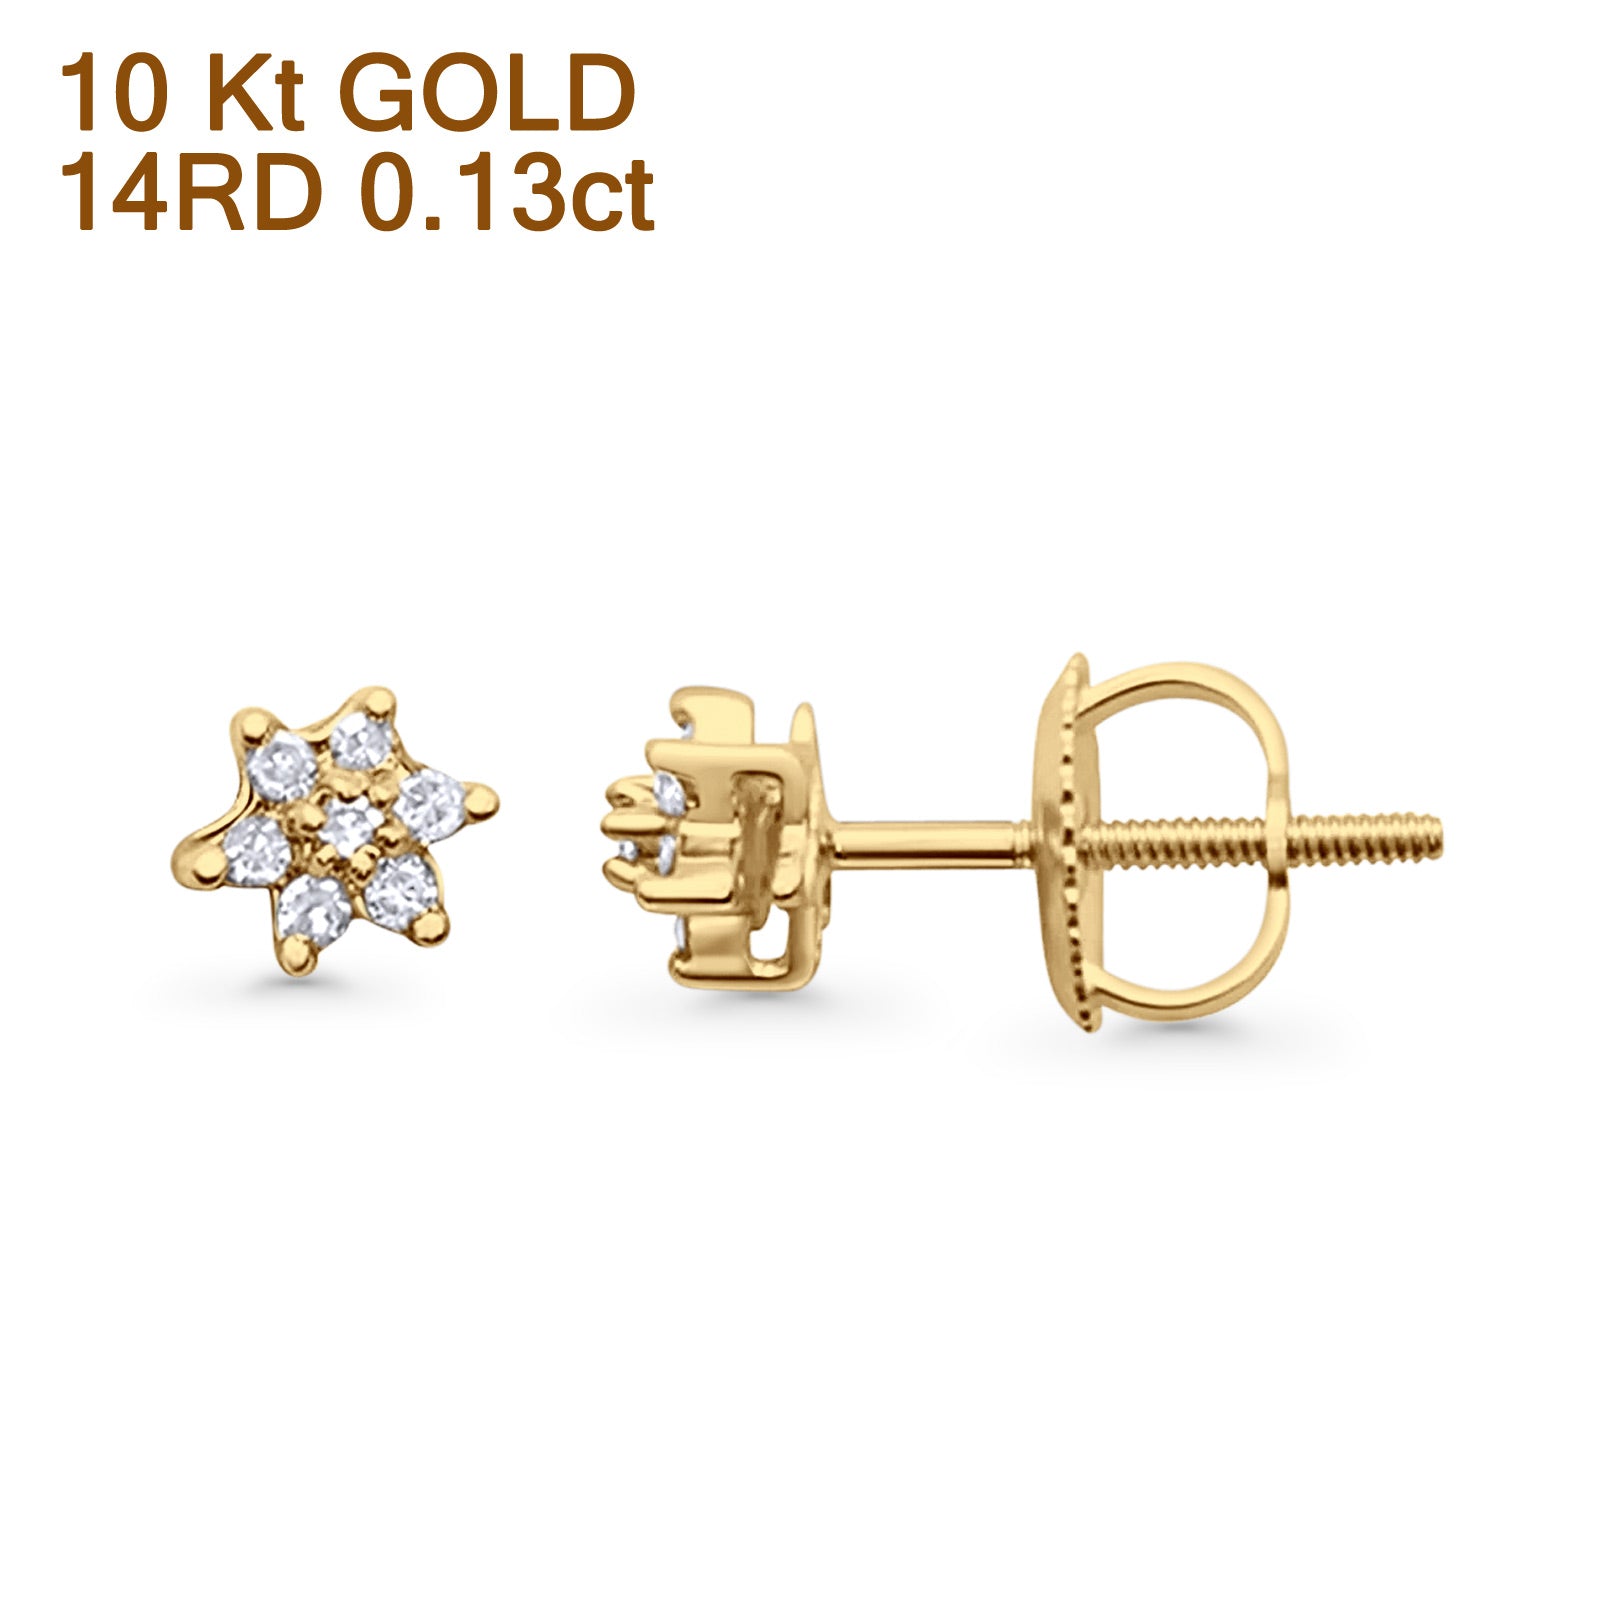 Solid 10K Gold 4mm Flower Round Hip Hop Diamond Stud Earring